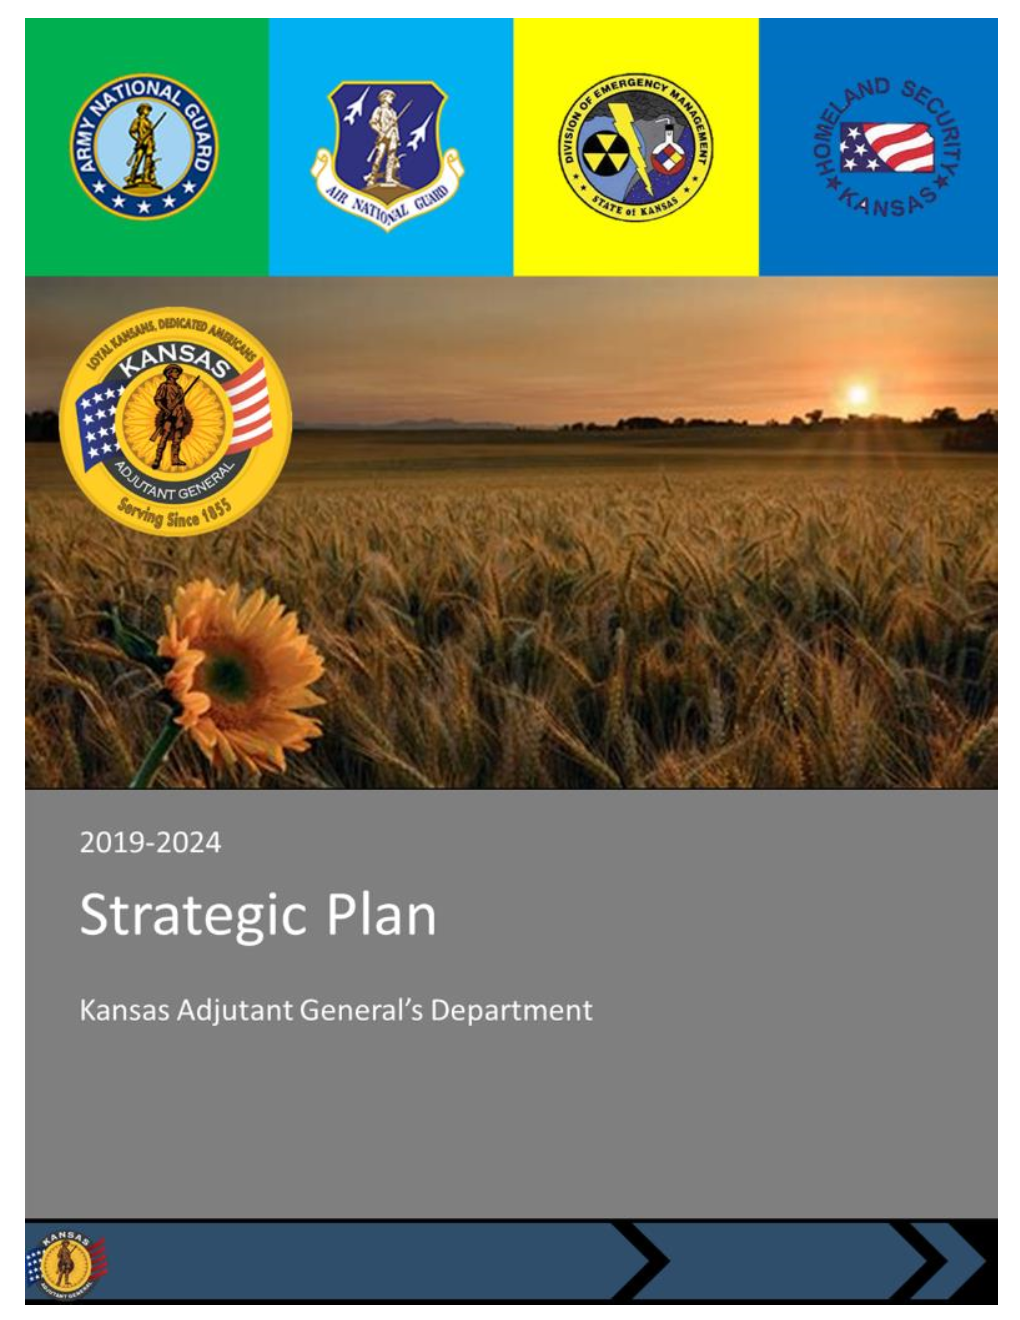 The Adjutant General's Department Organizational Structure